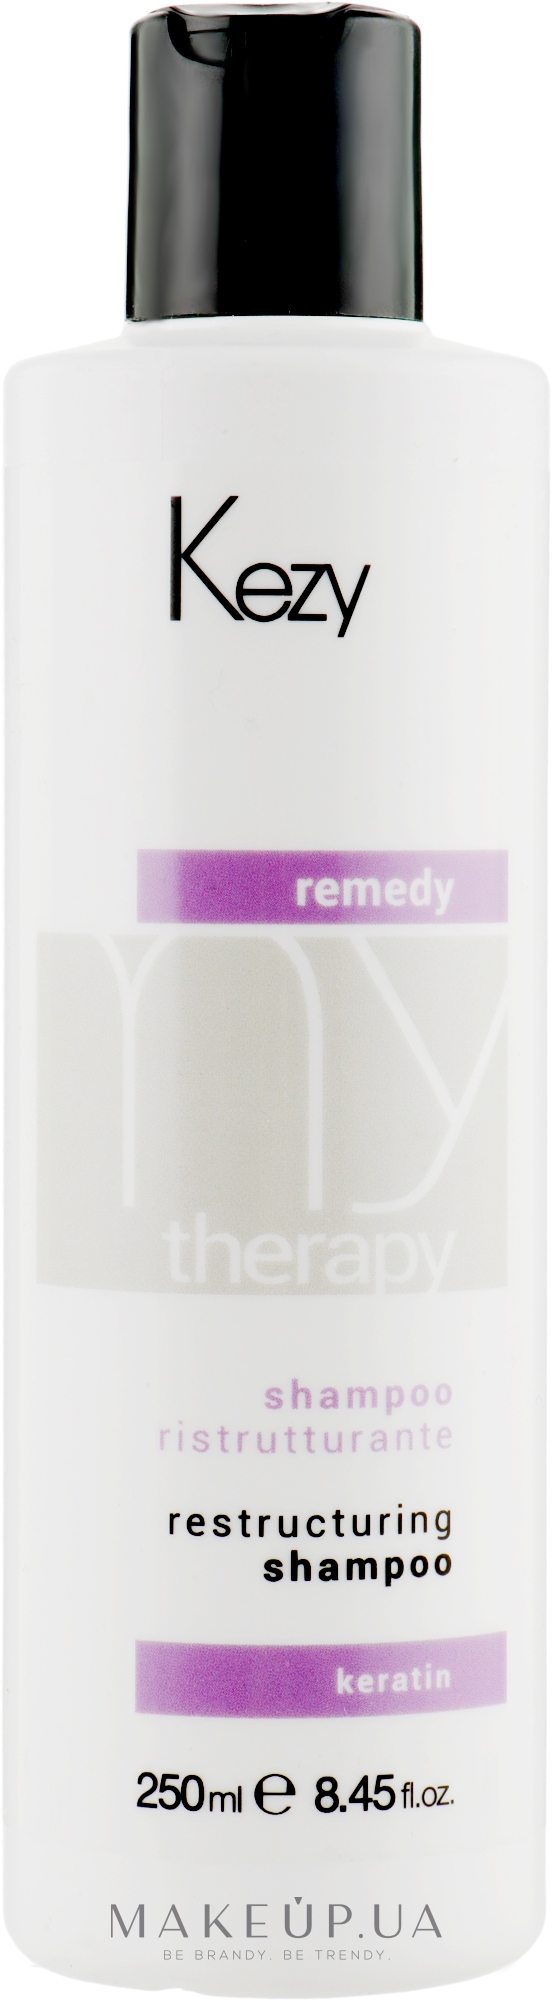 Восстанавливающий шампунь для волос с кератином - Kezy Remedy Restructuring Shampoo — фото 250ml